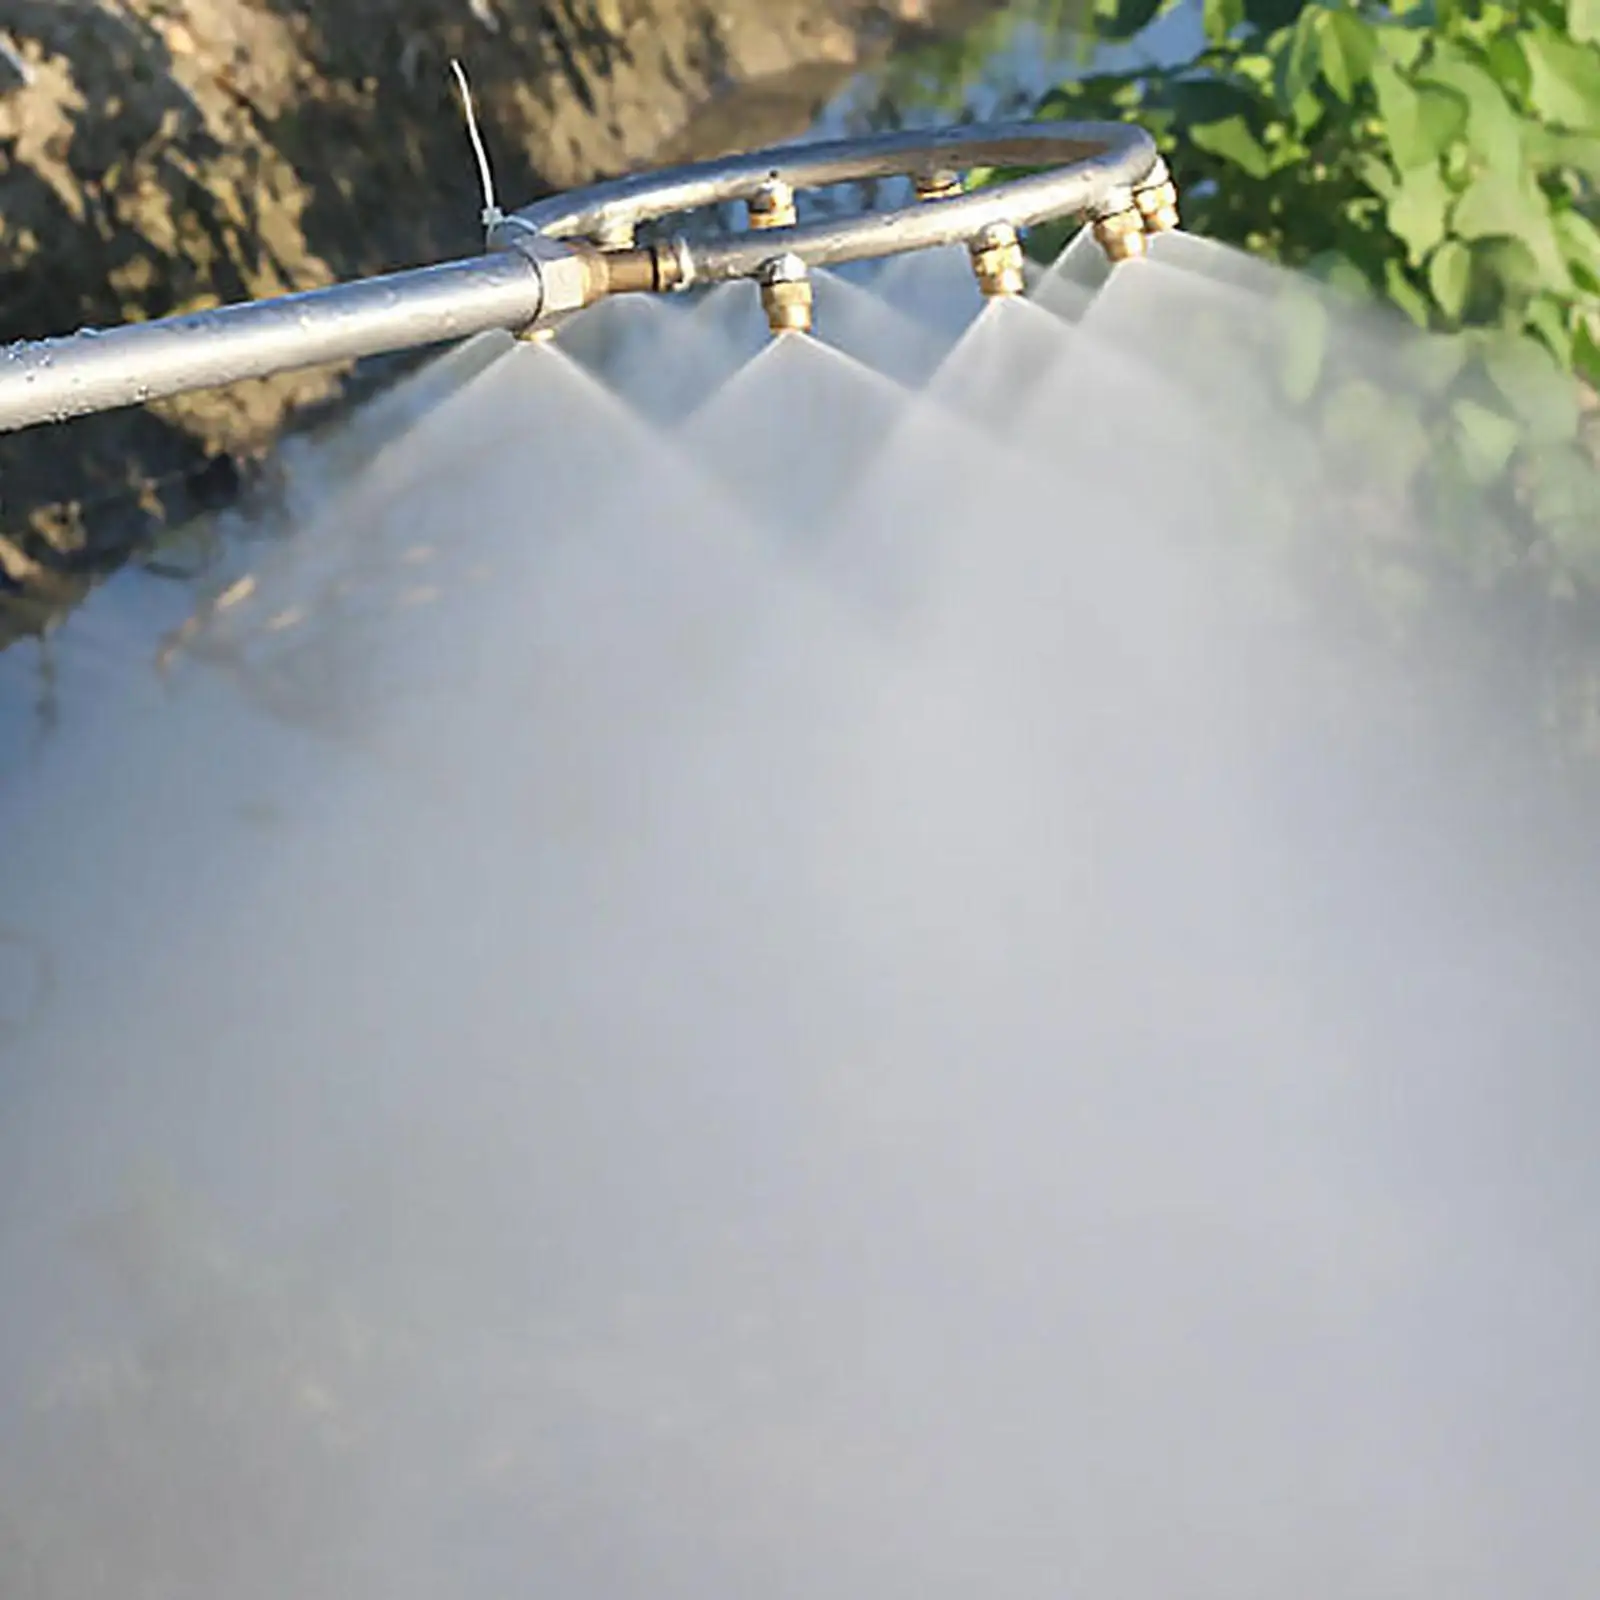 Water Sprinkler Watering Sprayer Sprinkler Nozzle Garden Watering Tool Garden Sprayer for Agriculture Greenhouse Watering